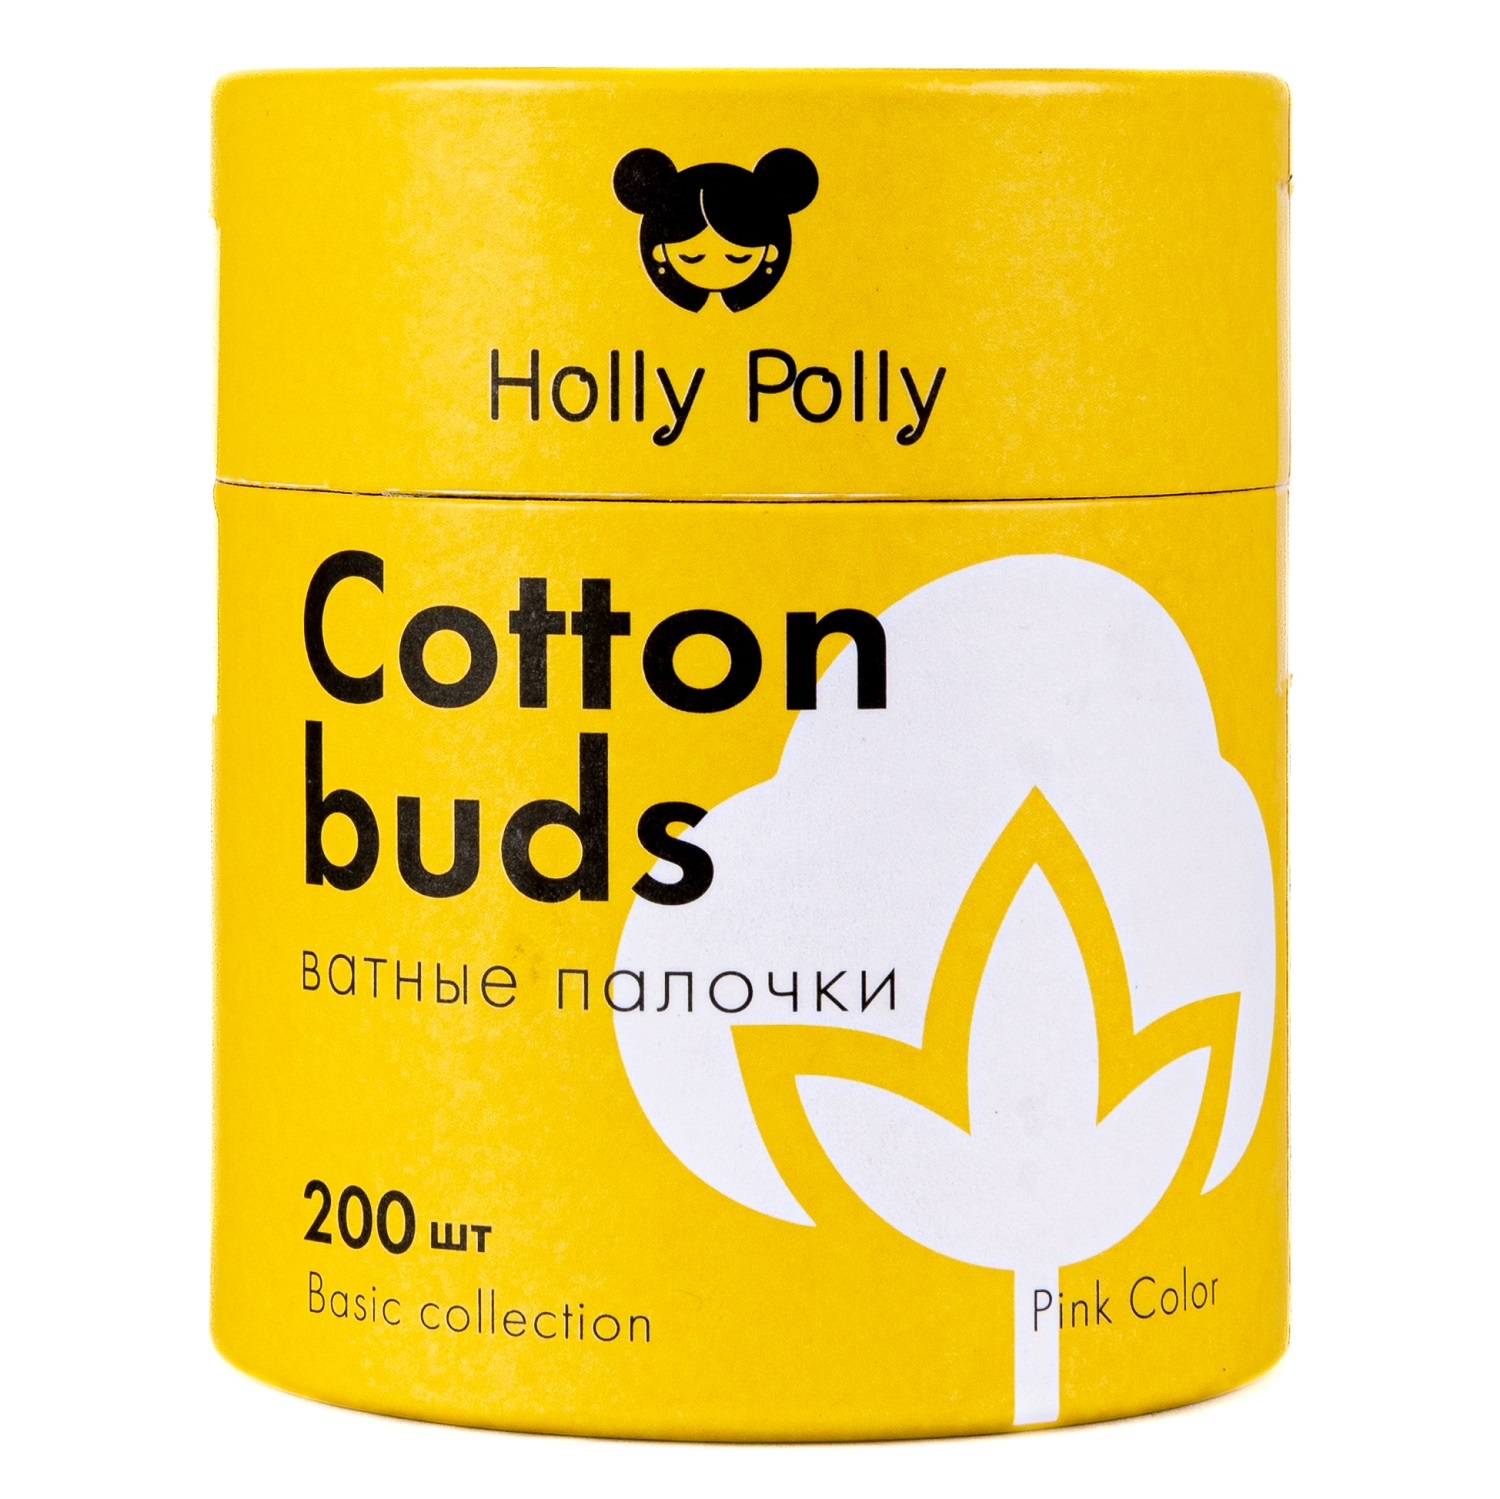 Holly Polly Косметические ватные палочки бамбуковые розовые, 200 шт (Holly Polly, Cotton Pads & Buds) ватные палочки бамбуковые holly polly косметические розовый 200 шт банка